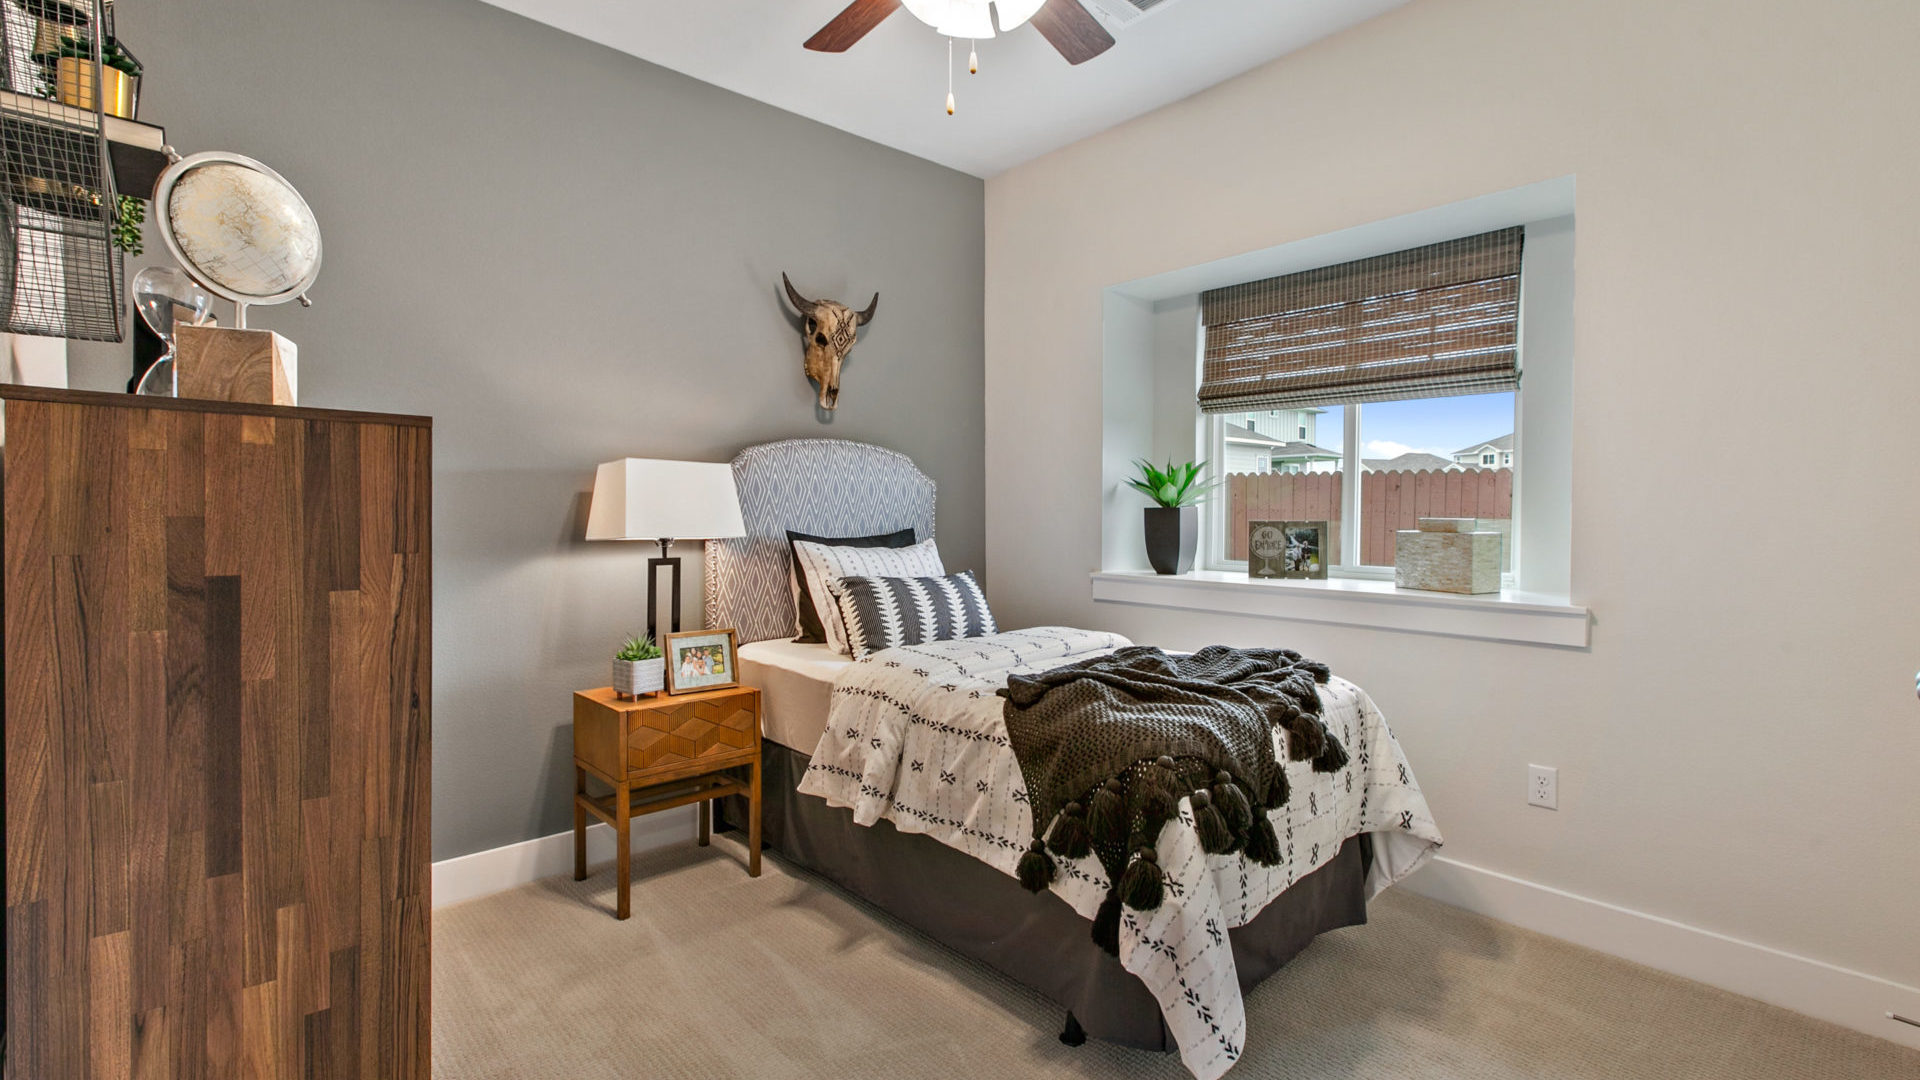 Vistas of Austin Community Model Home Bedroom